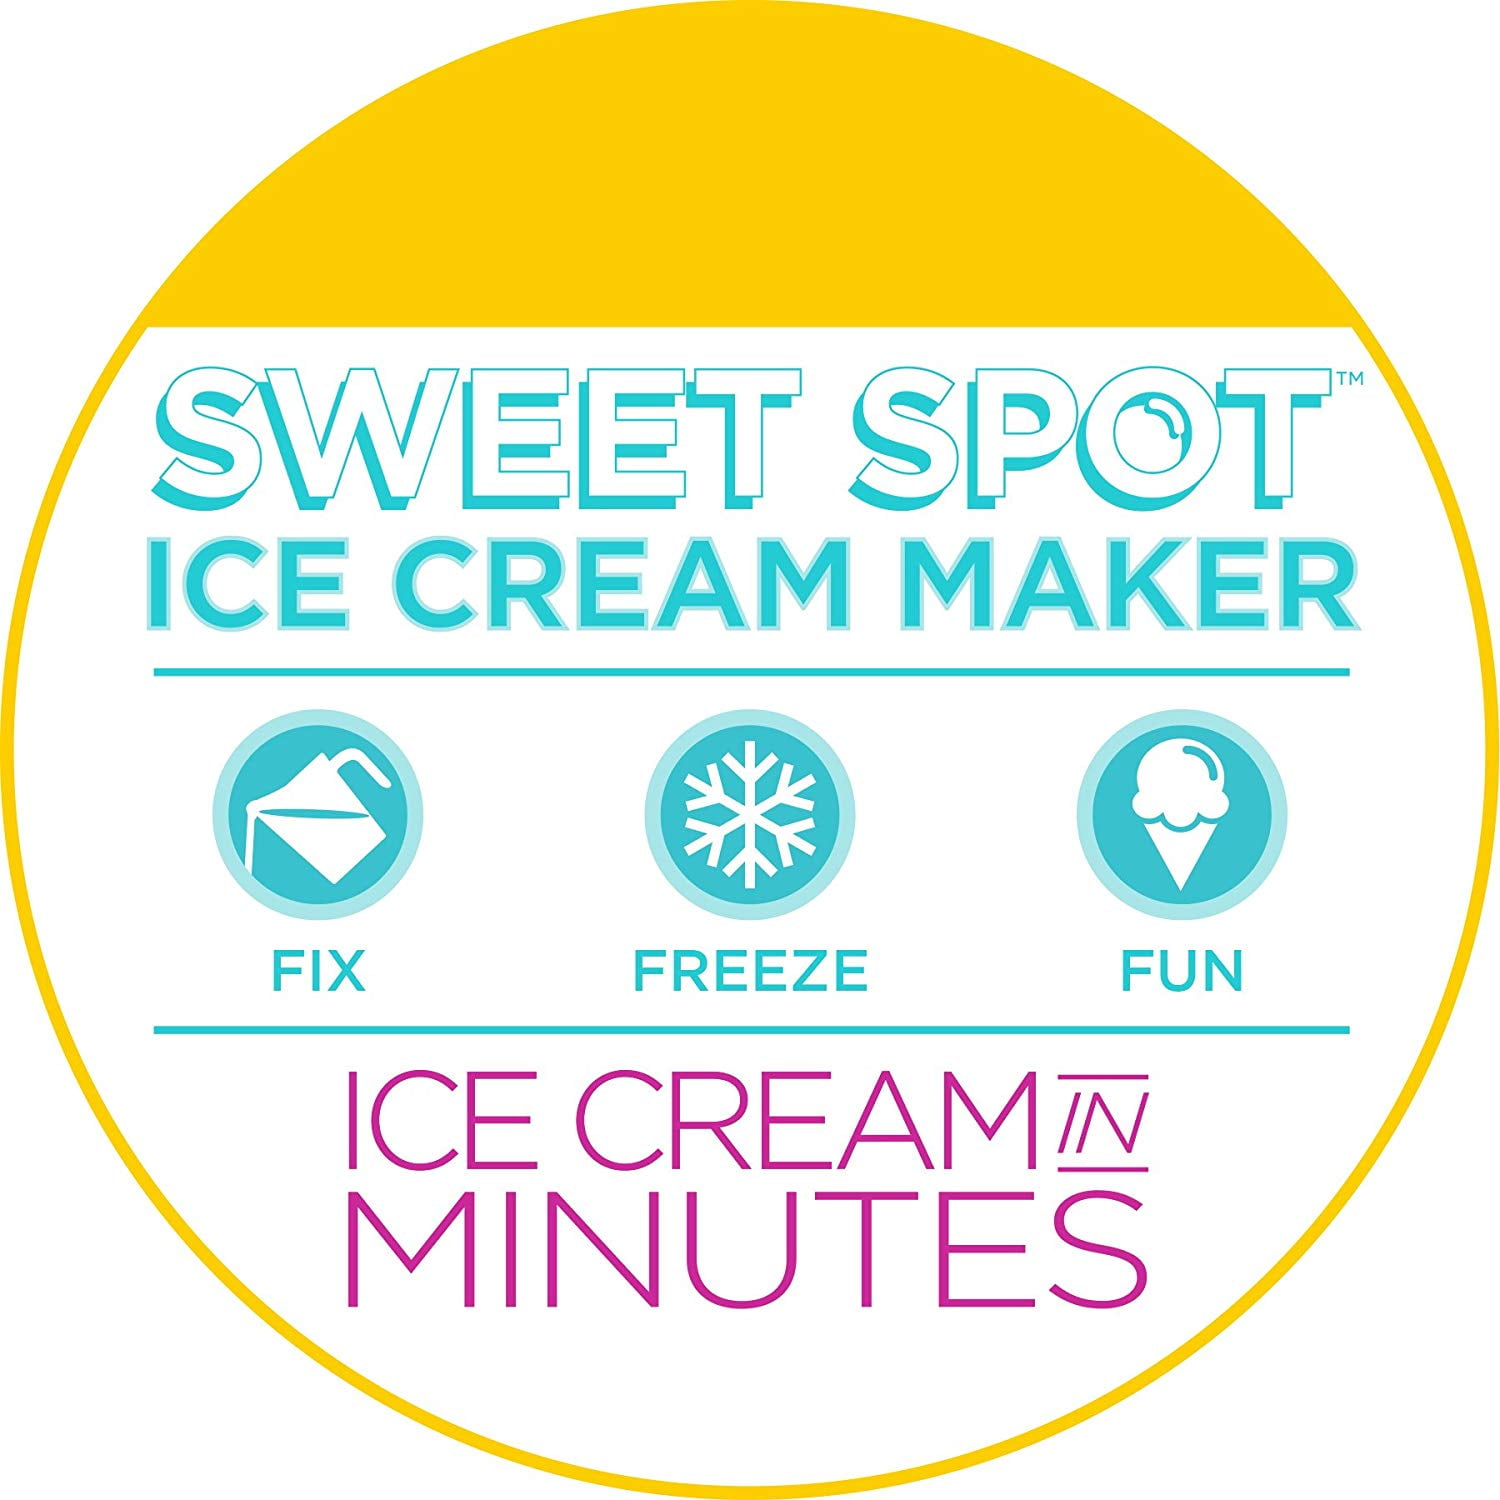 Sweet Spot Ice Cream Maker